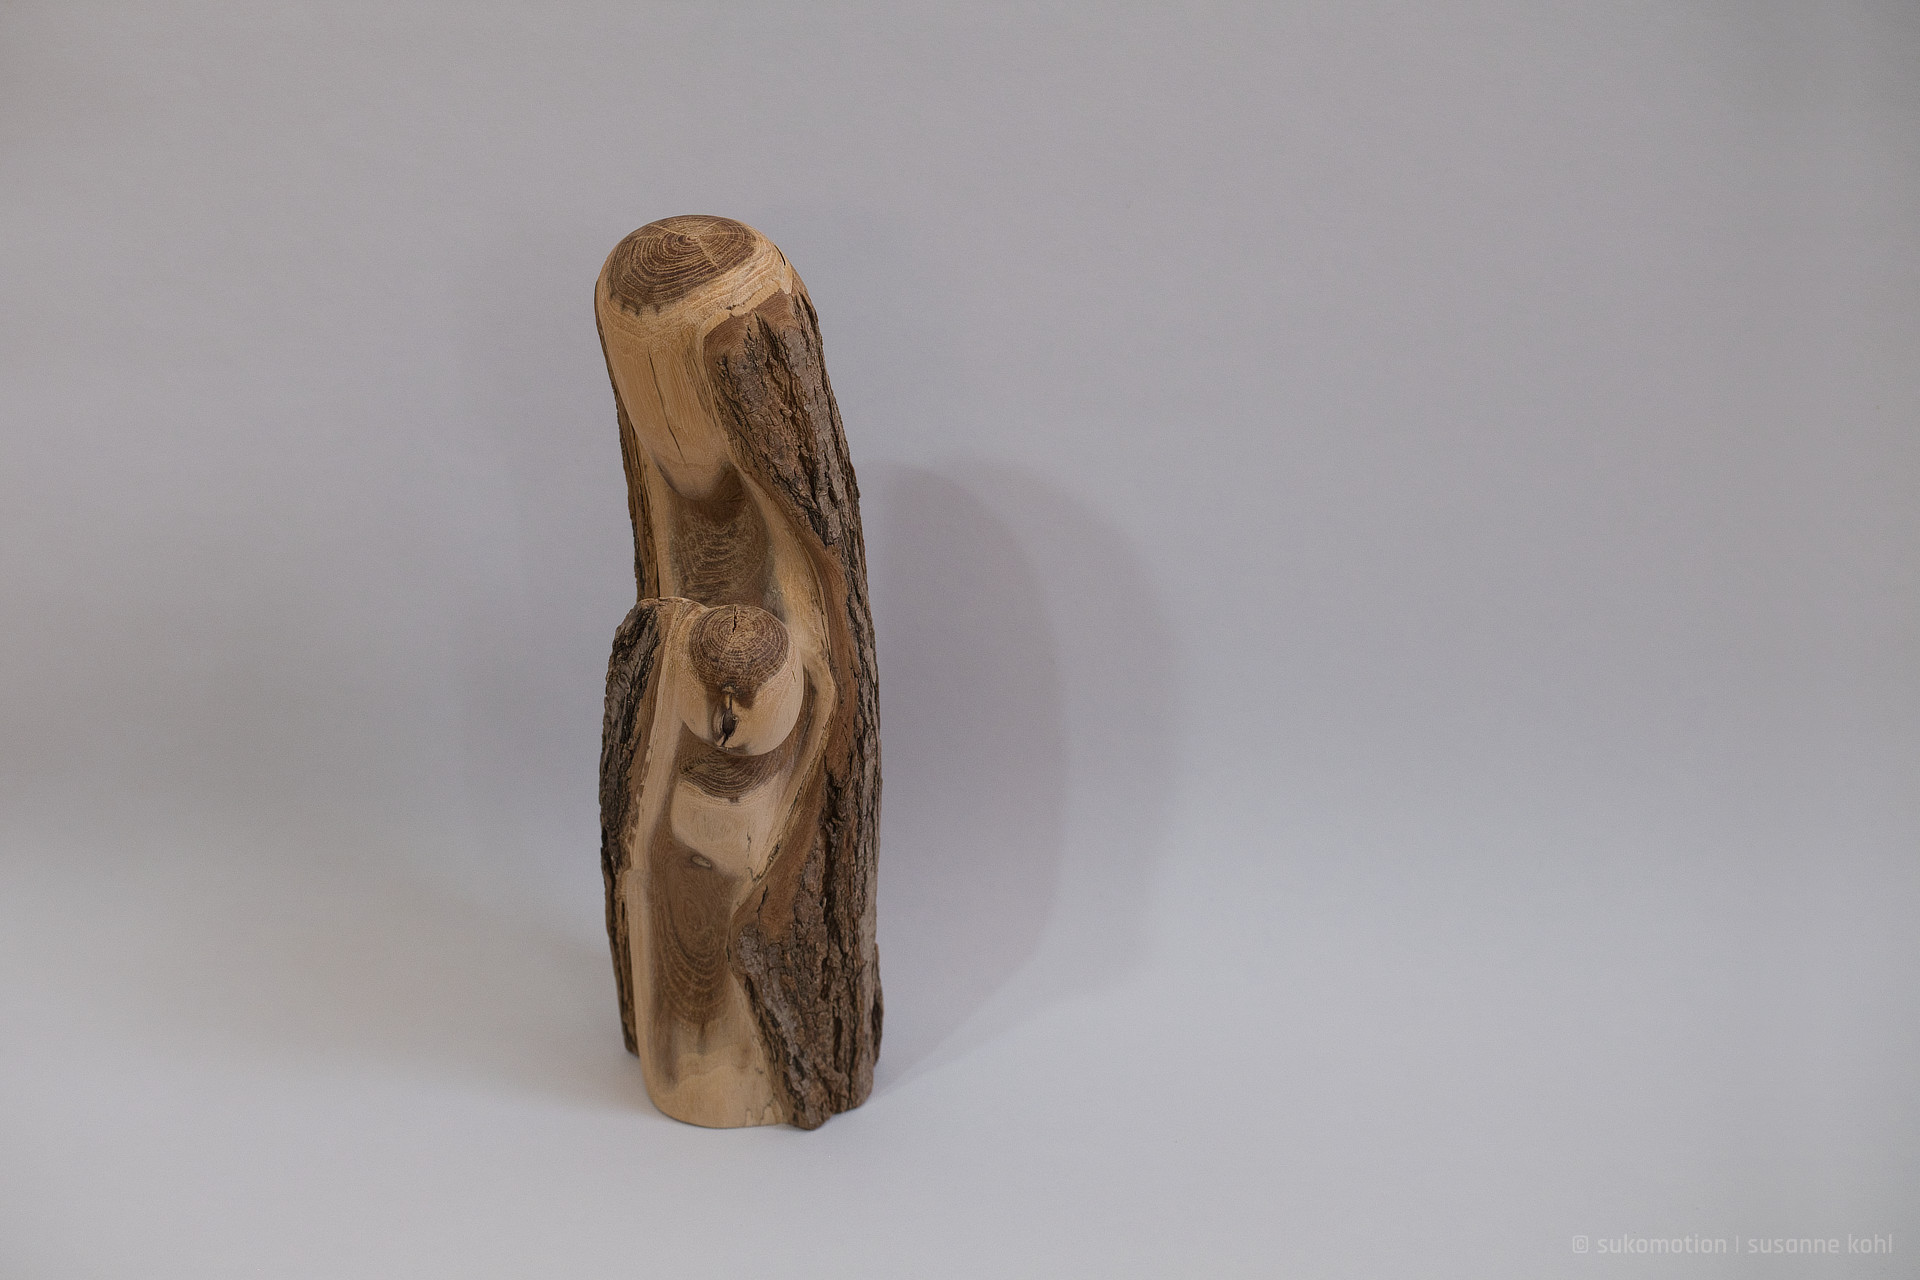 safe & curious - woodsculpture  by sukomotion | susanne kohl - berlin